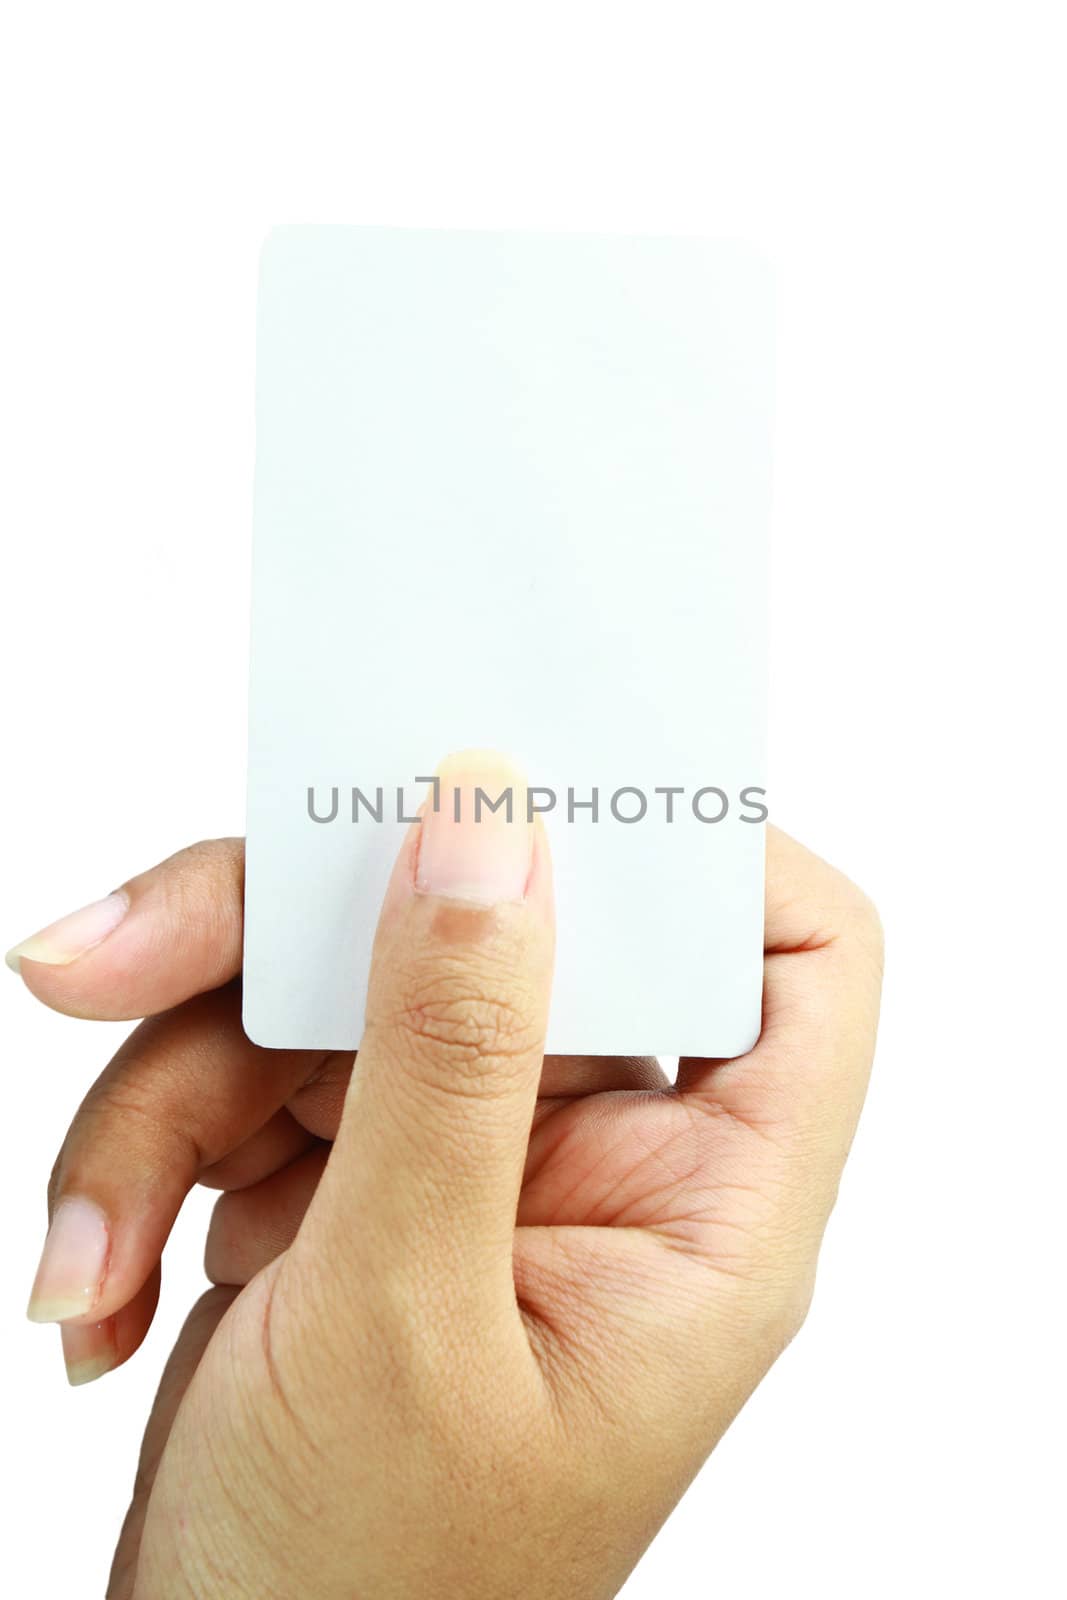 blank business card on white background. by bajita111122